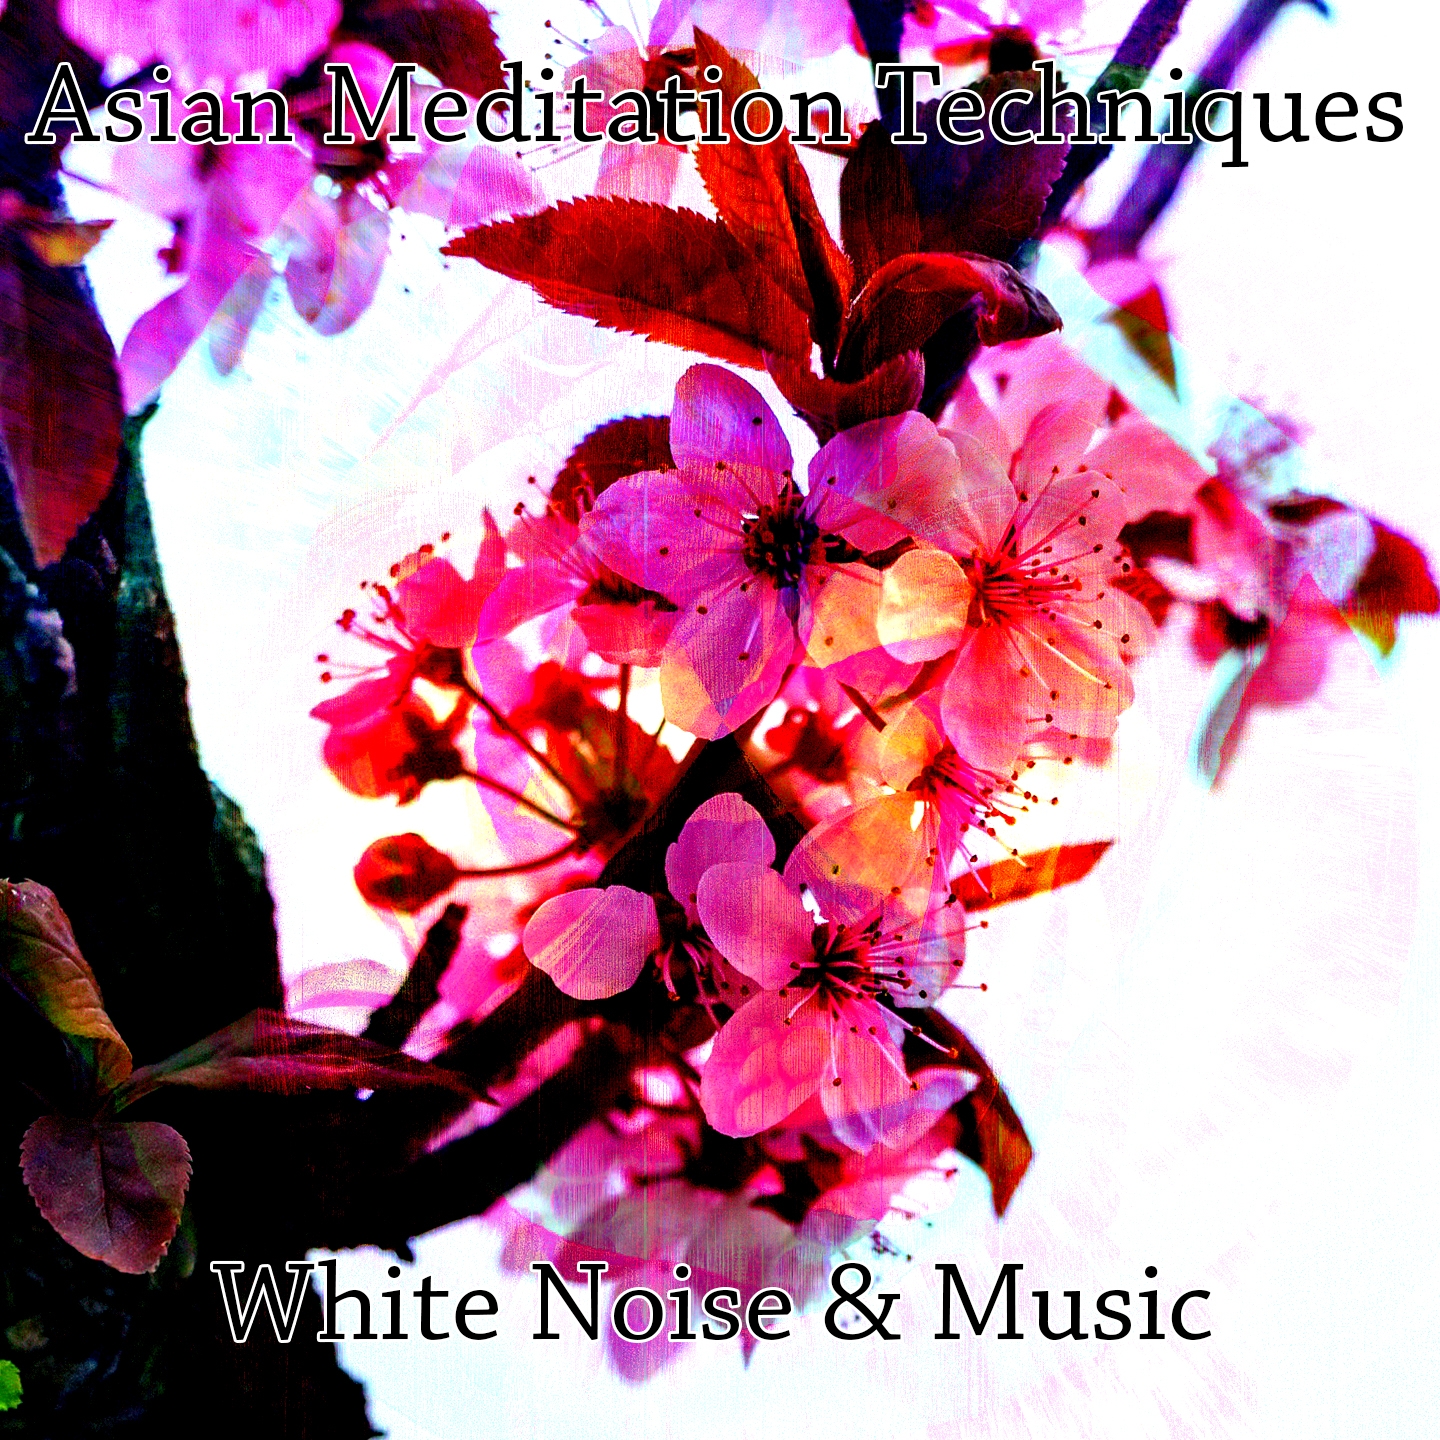 Asian Meditation Techniques White Noise & Music